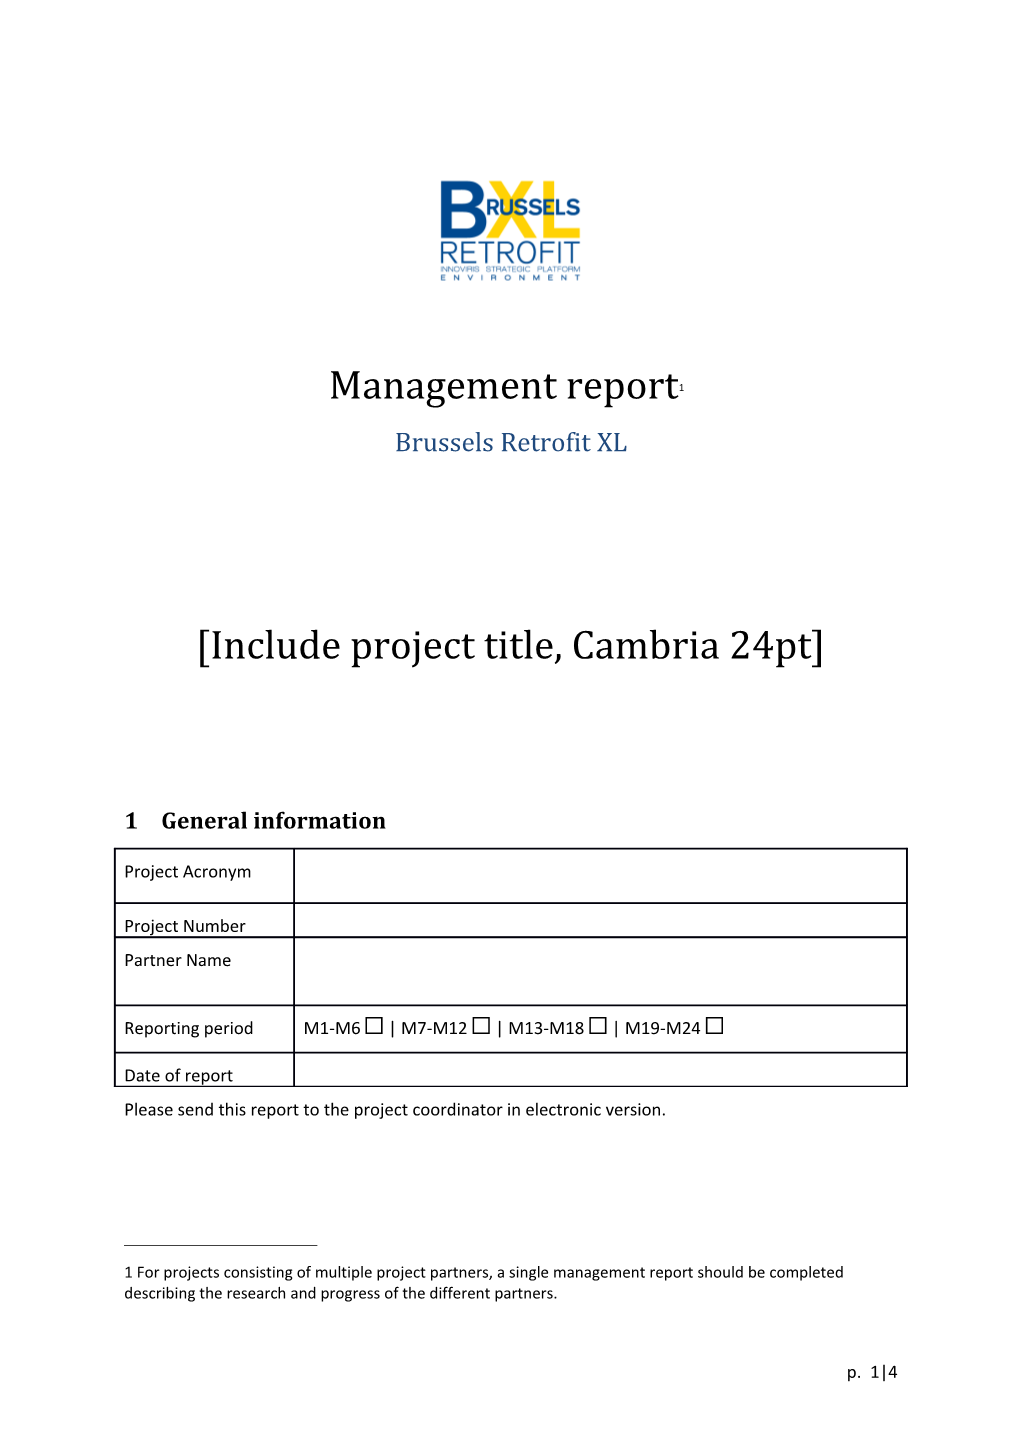 Management Report *